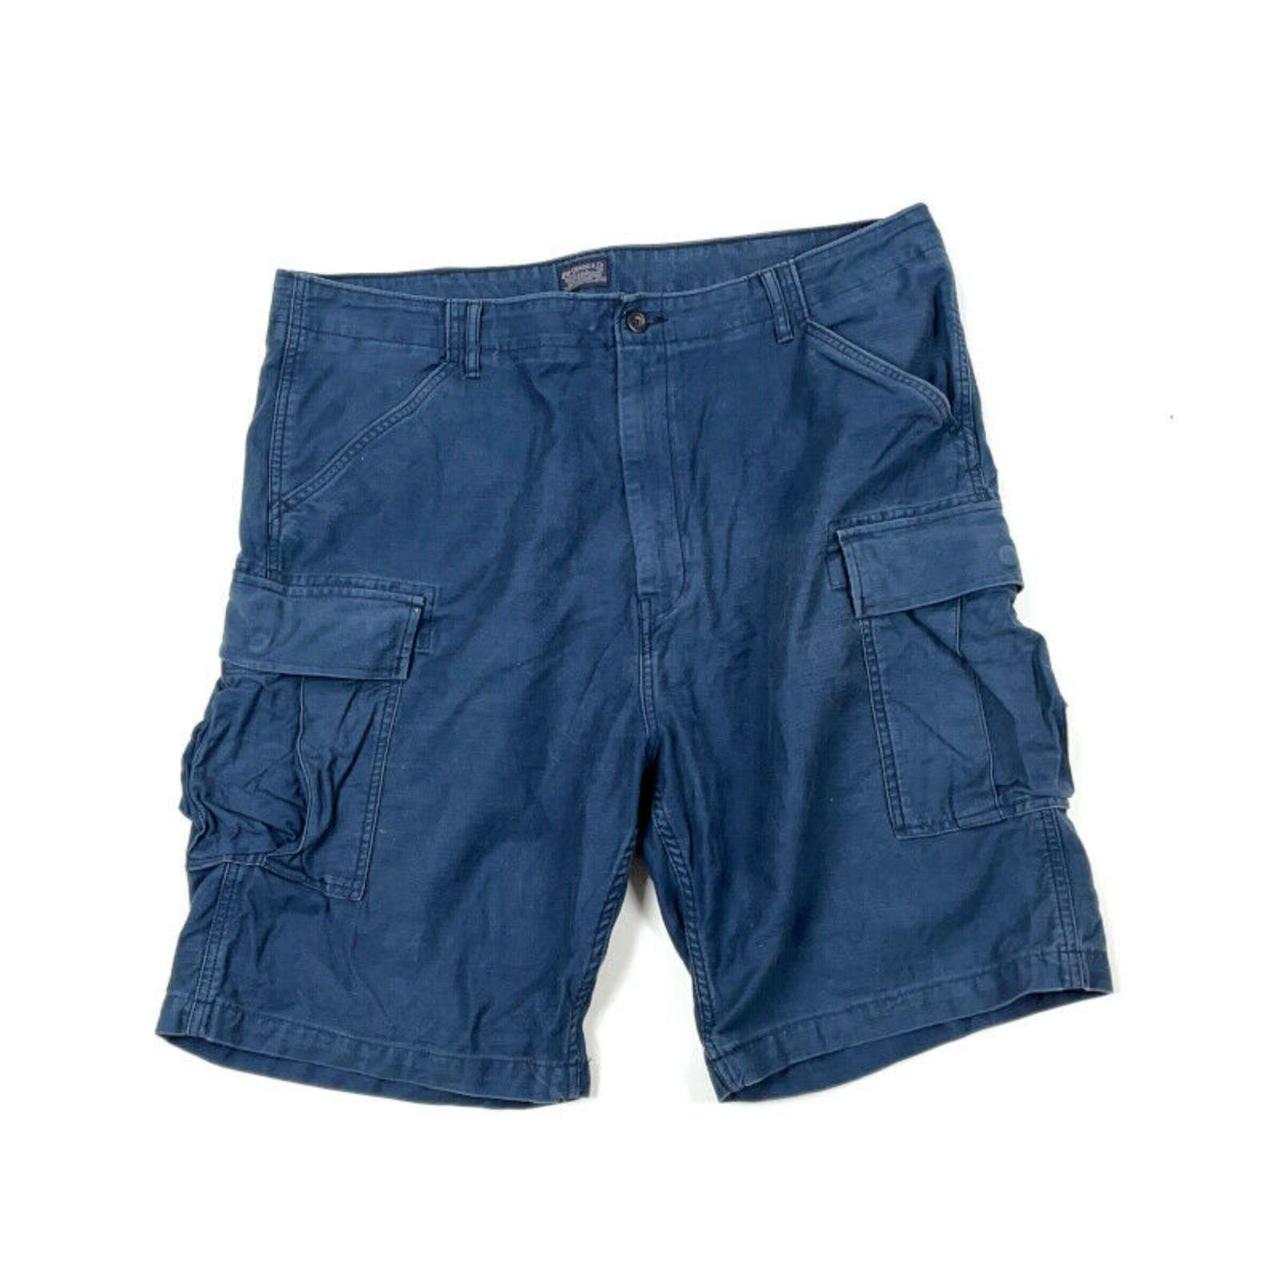 Levi's Men's Blue and Navy Shorts | Depop